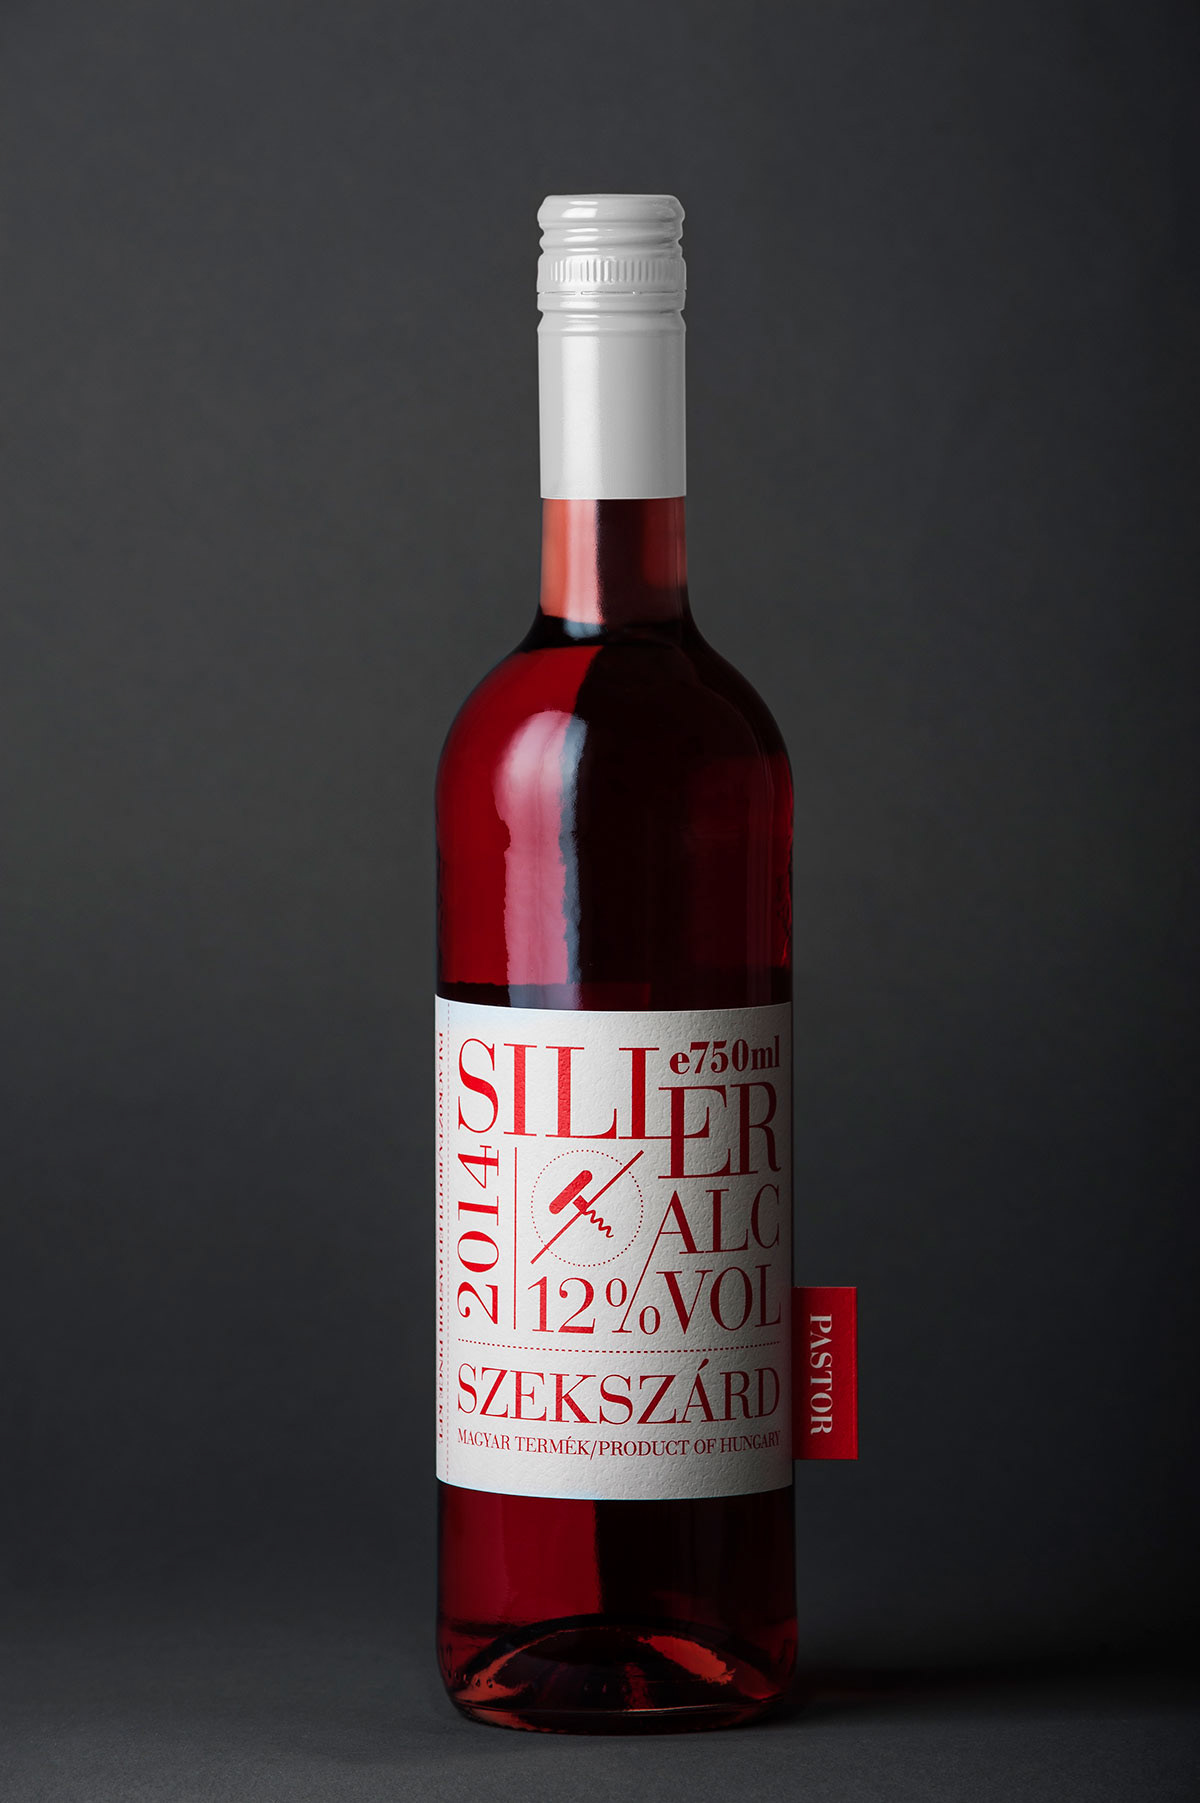 pasztor winery wine design kissmiklos Nikon studio balintjaksadotcom